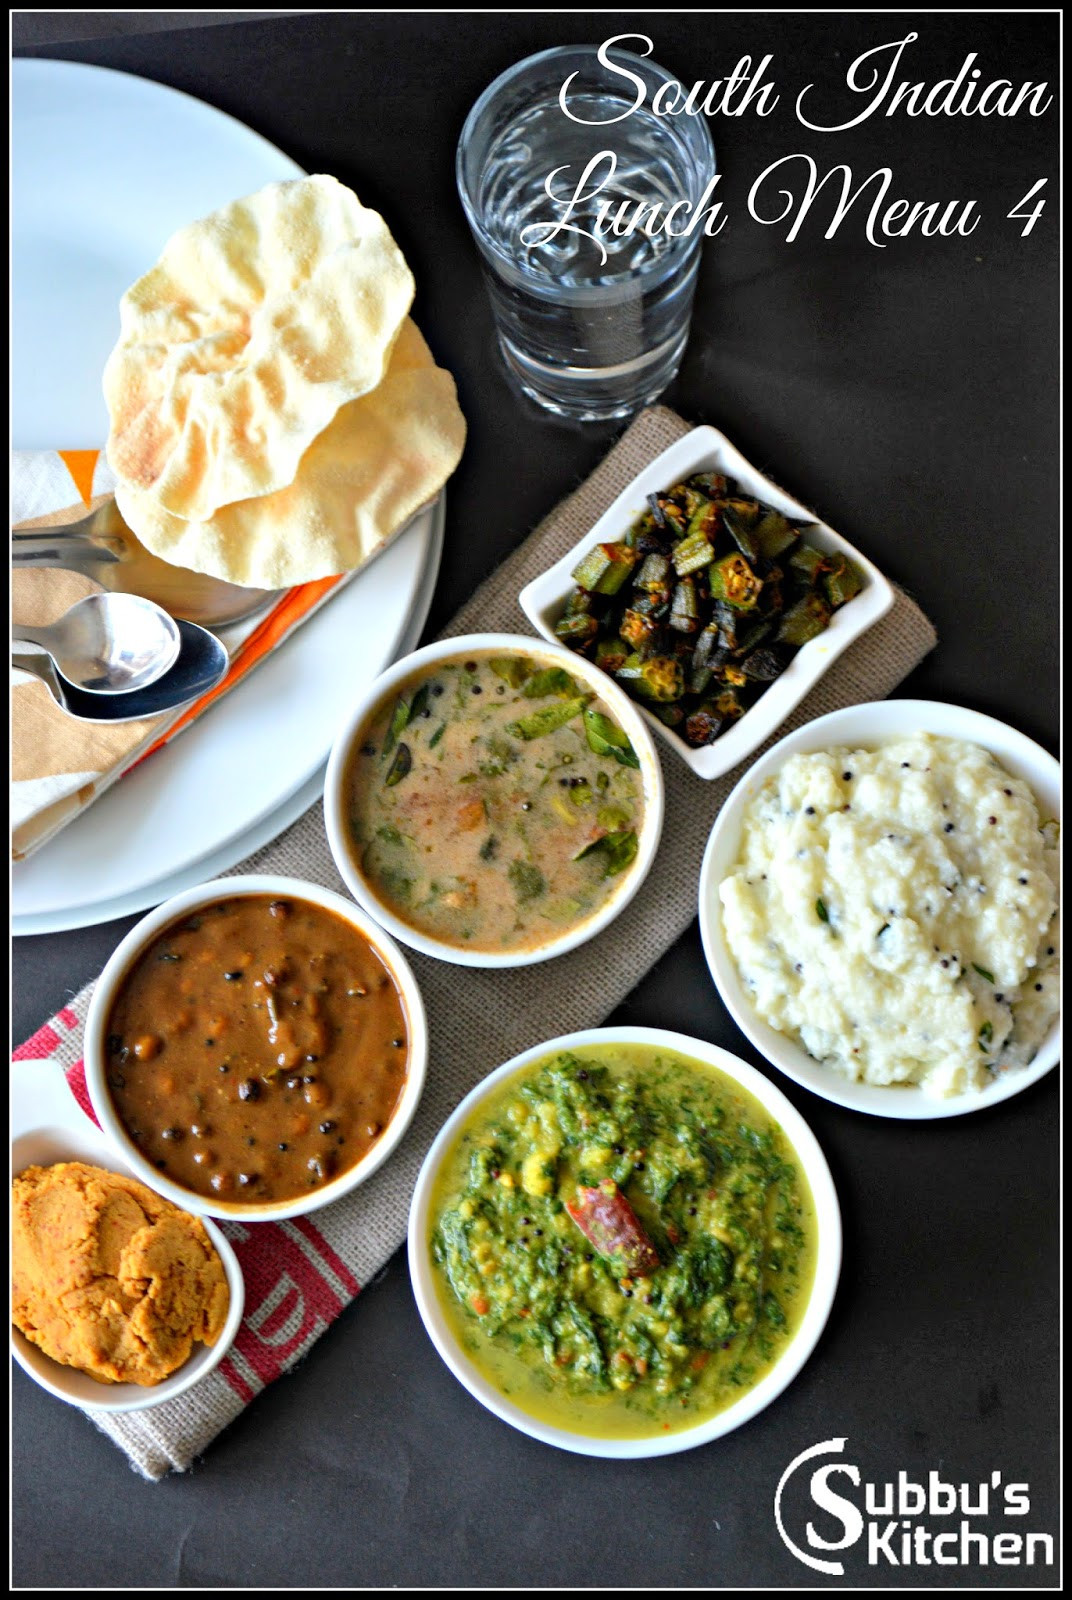 South Indian Dinner Recipes
 South Indian Lunch Menu 4 Vathakuzhambu Araitha Rasam